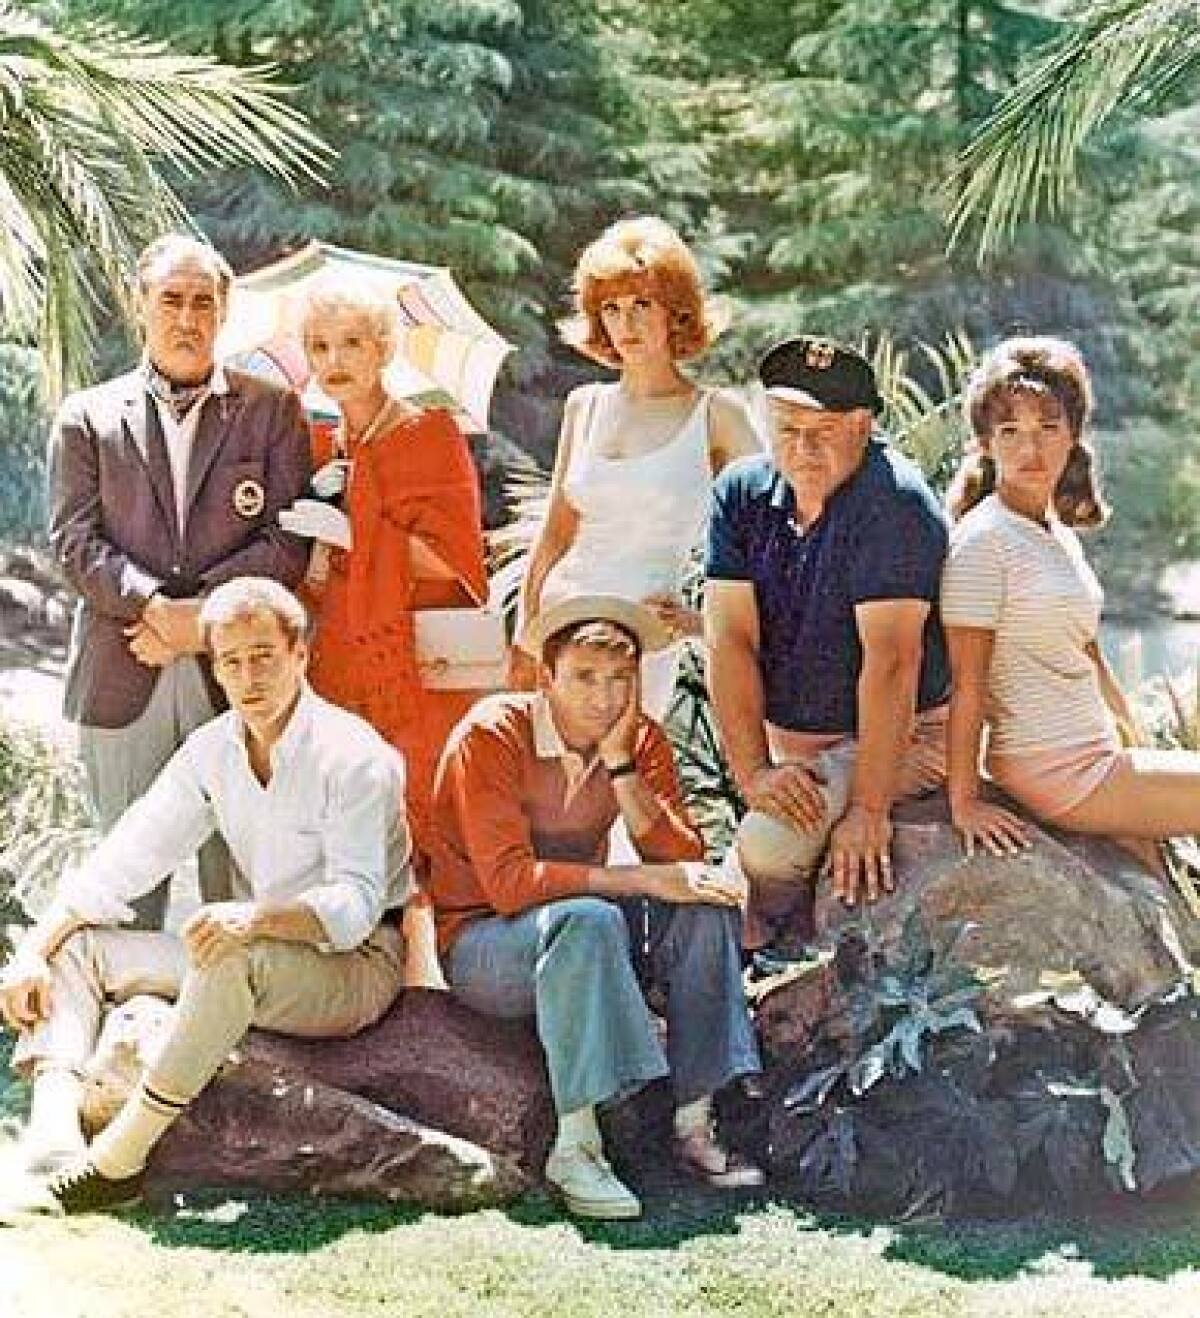 Cast of "Gilligan's Island"